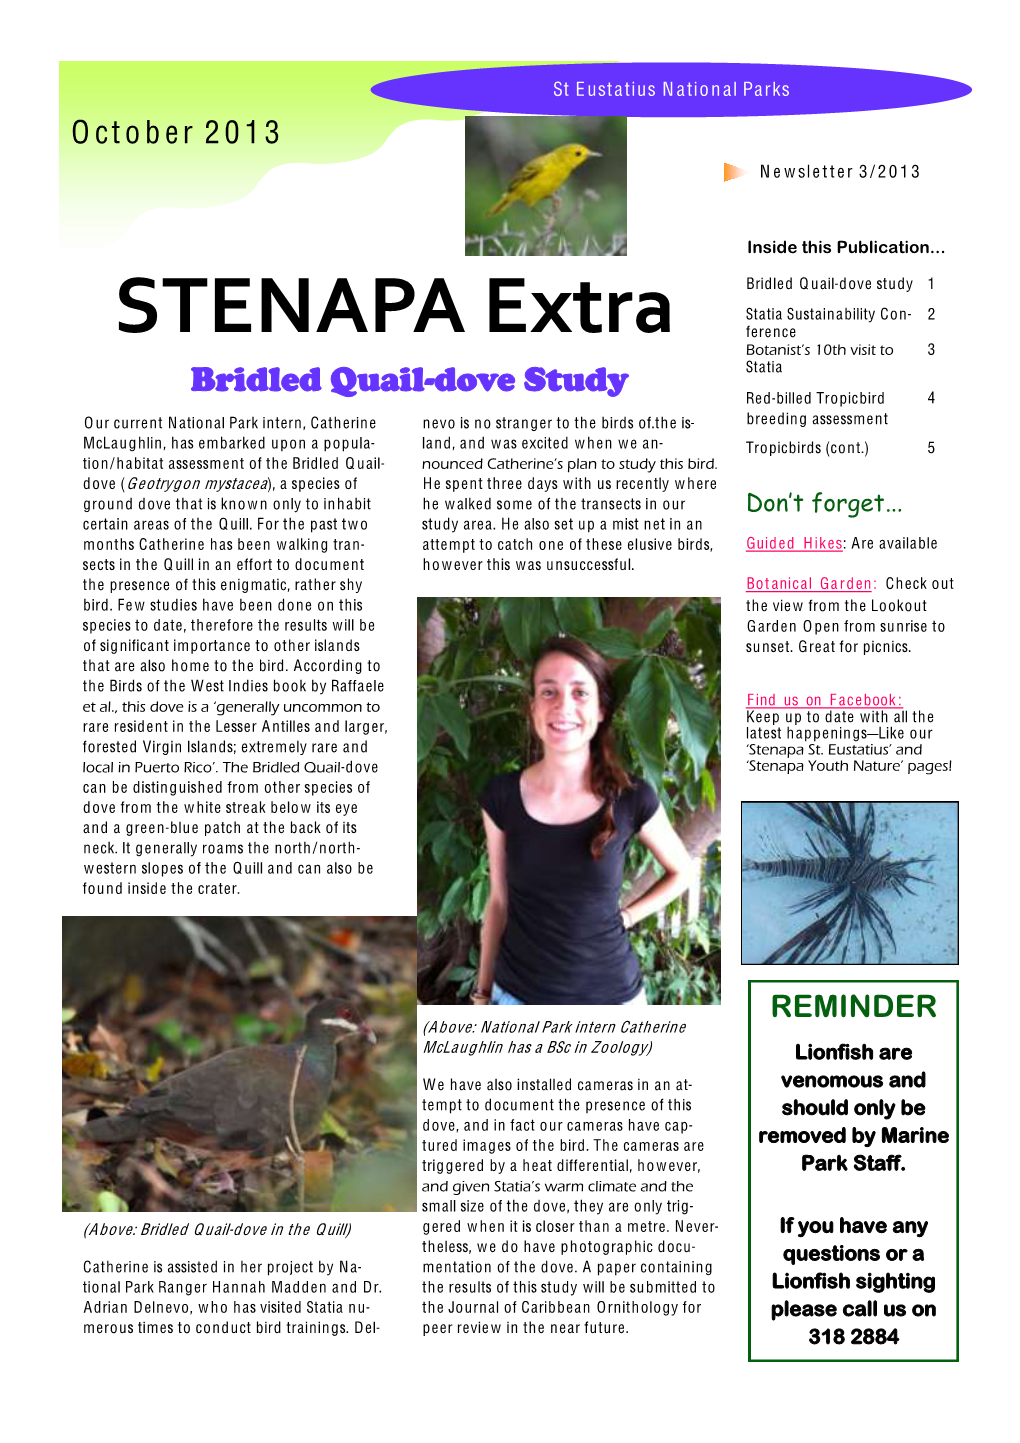 STENAPA Extra